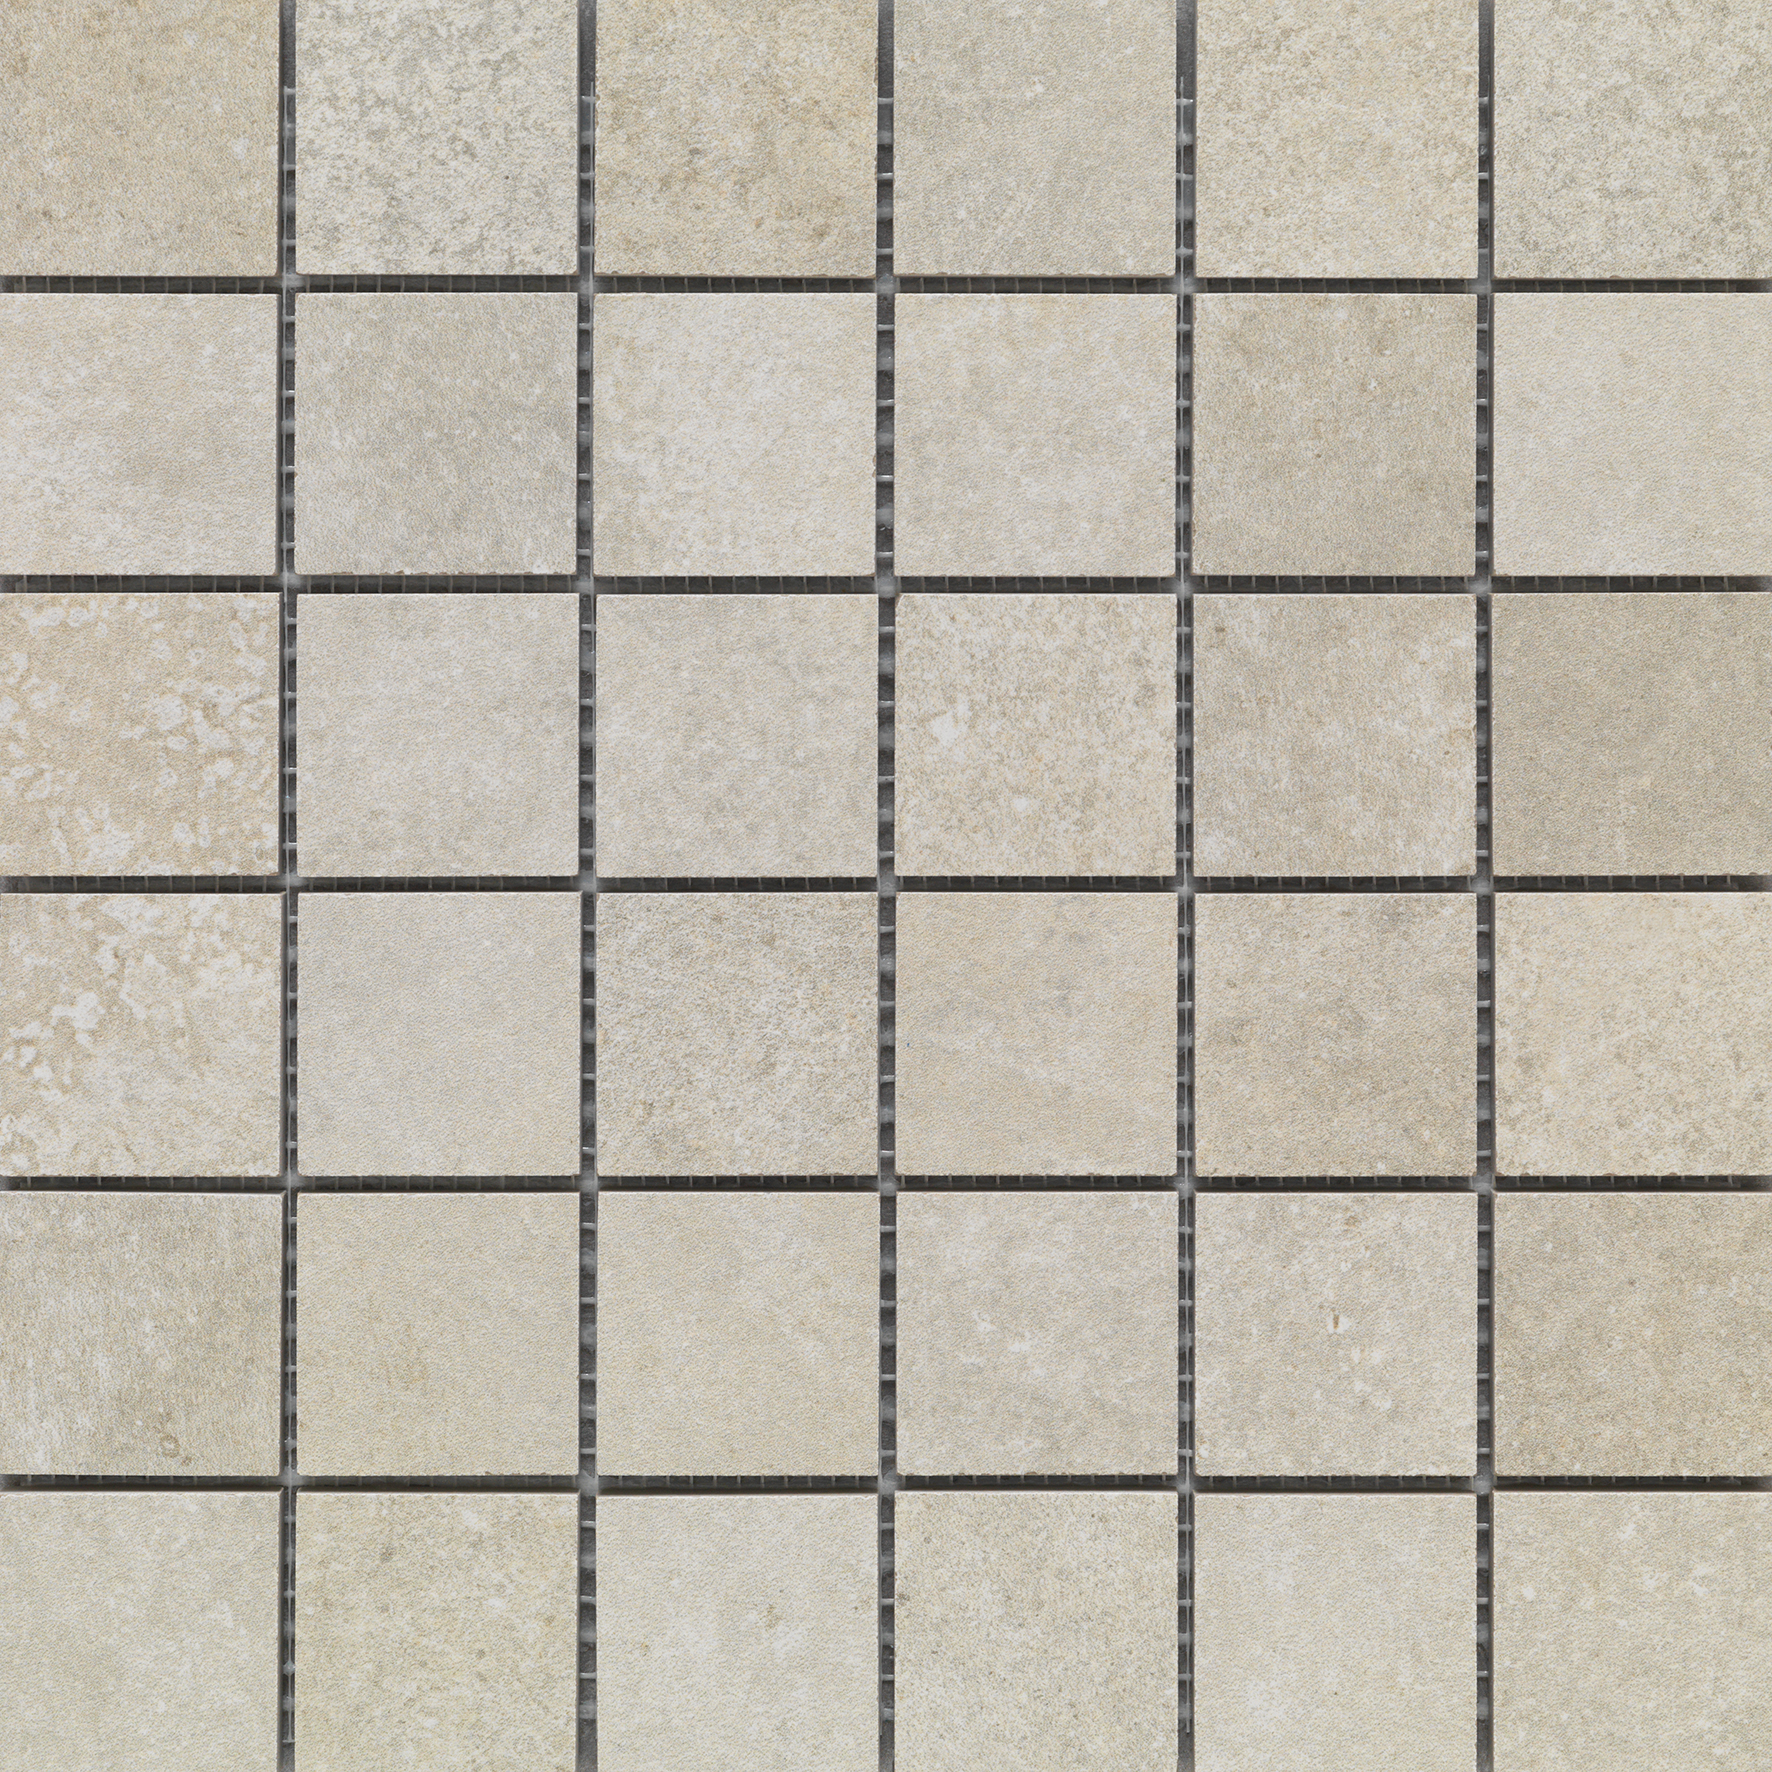 Urbanixx Gres Catania Mosaik Natursteinoptik Sand matt 30x30 cm rekt. R10B